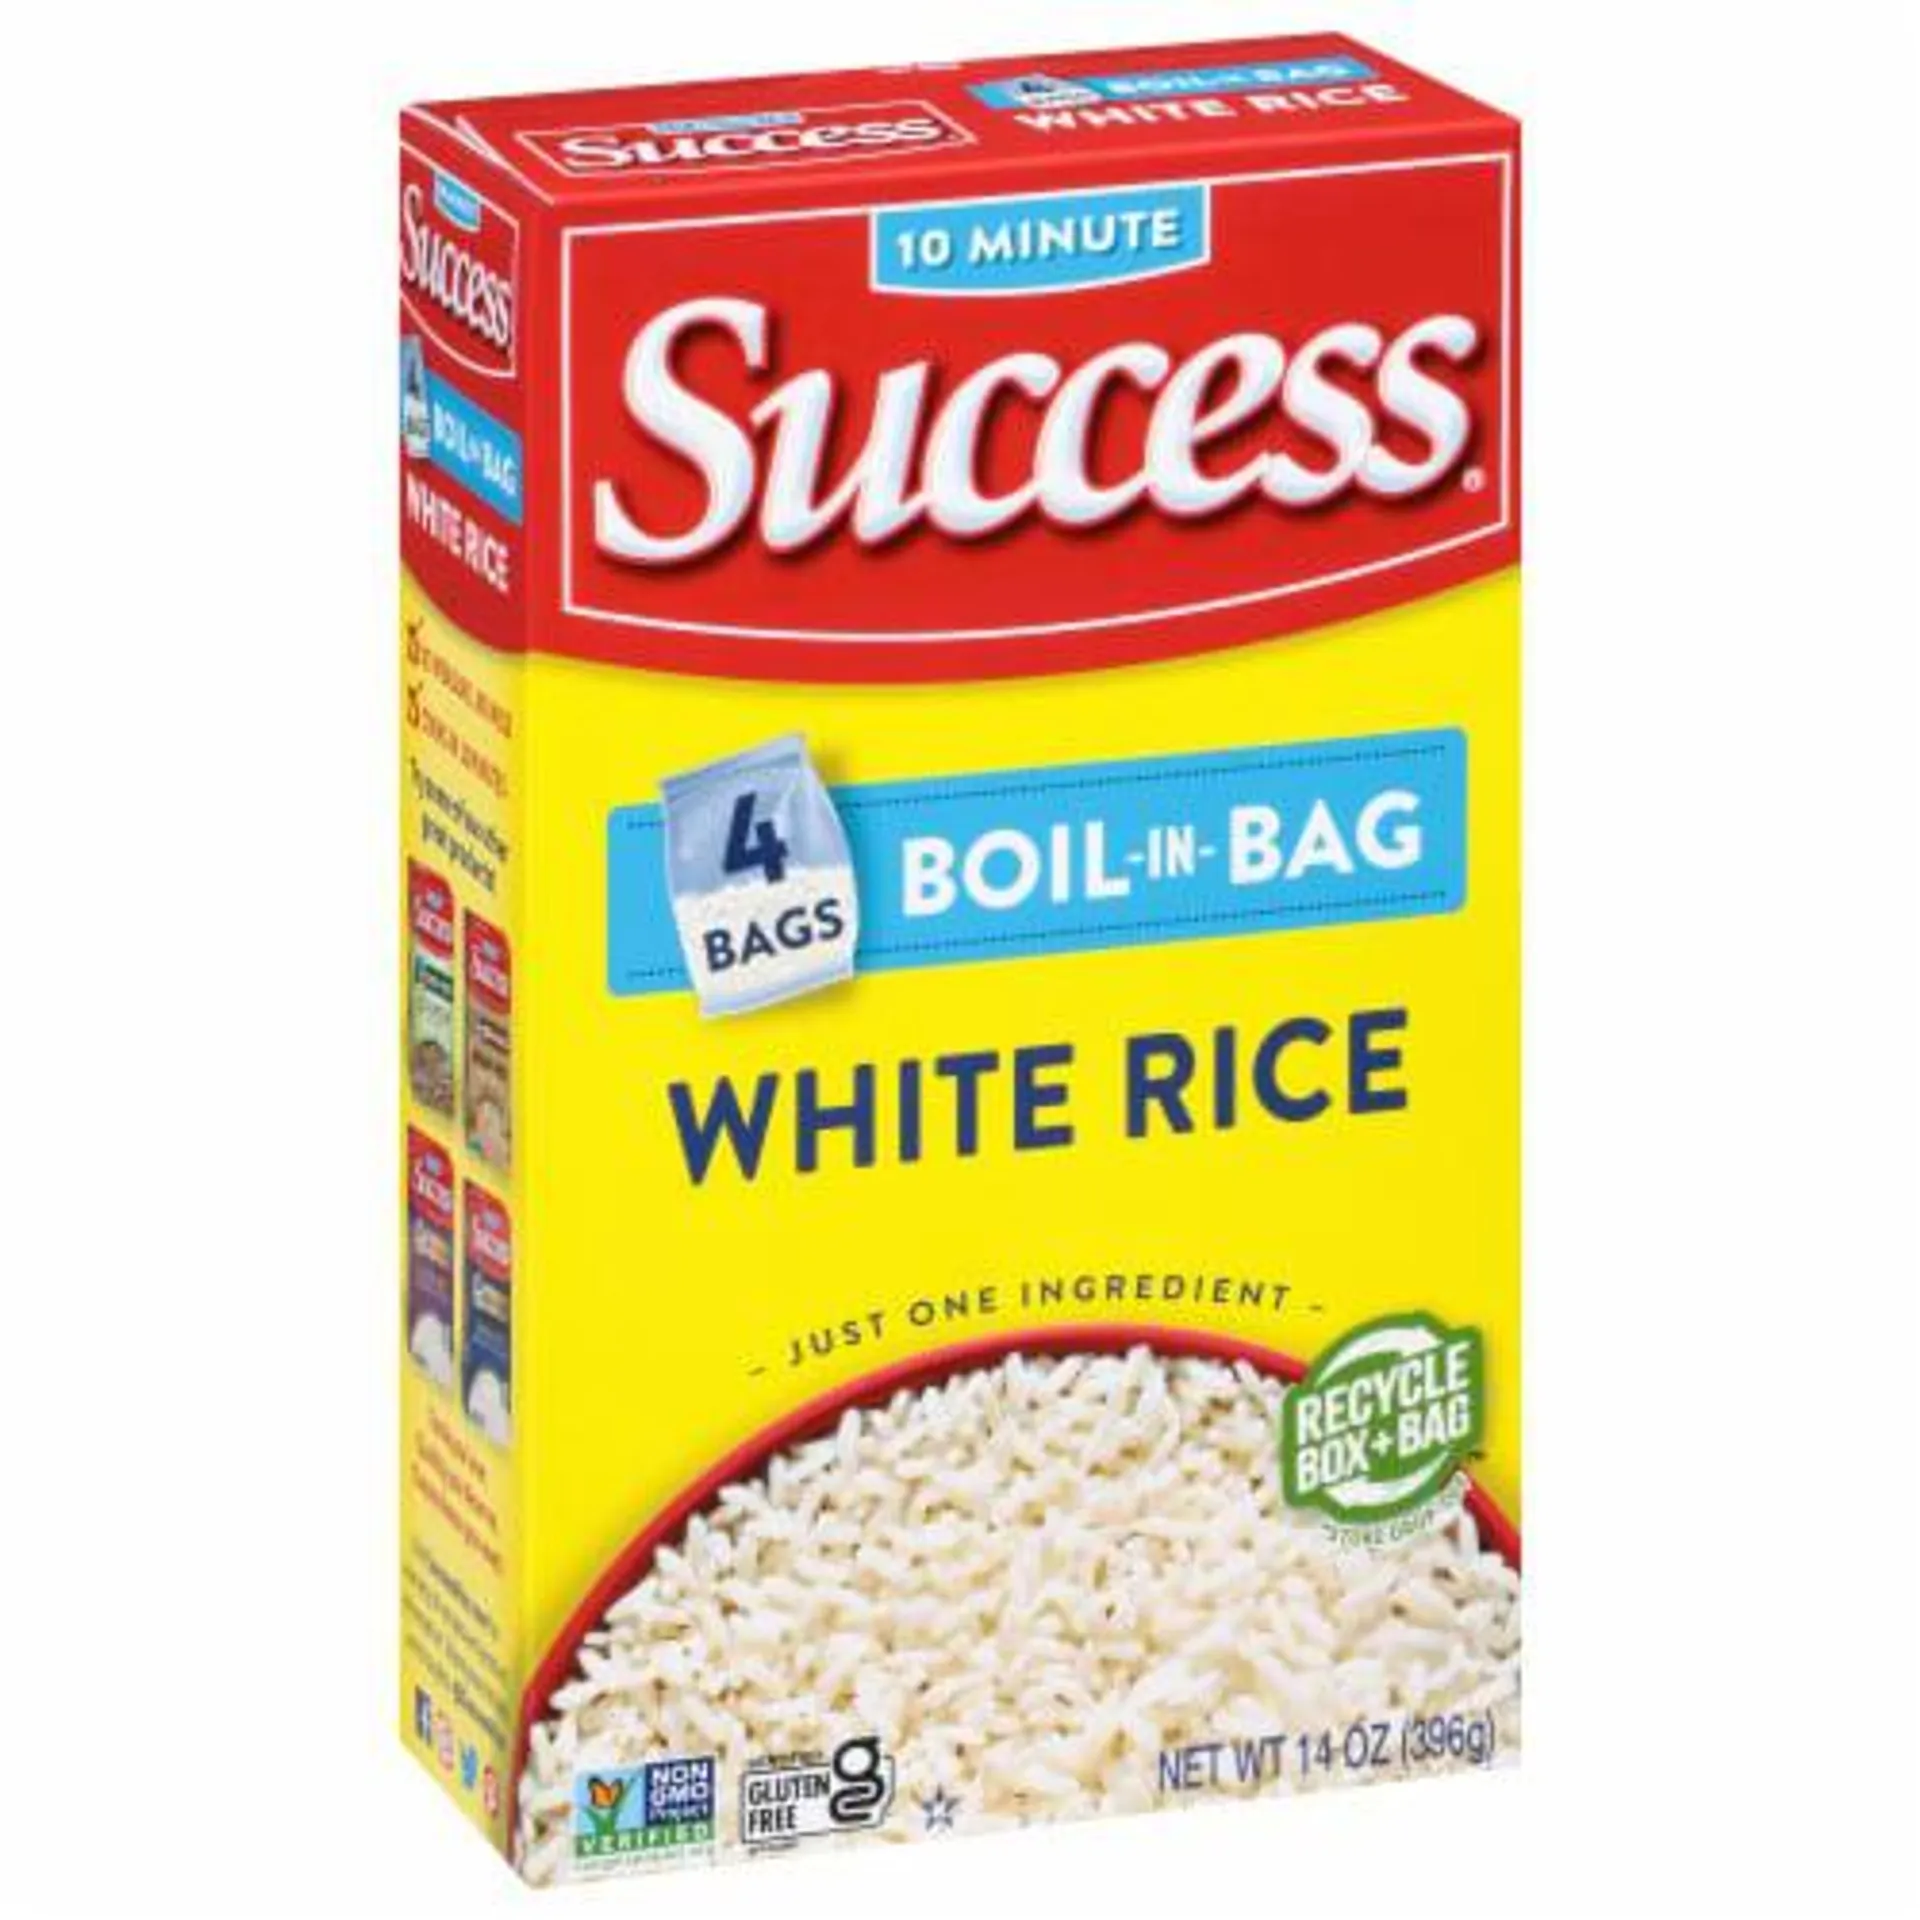 Success Boil-in-Bag White Rice